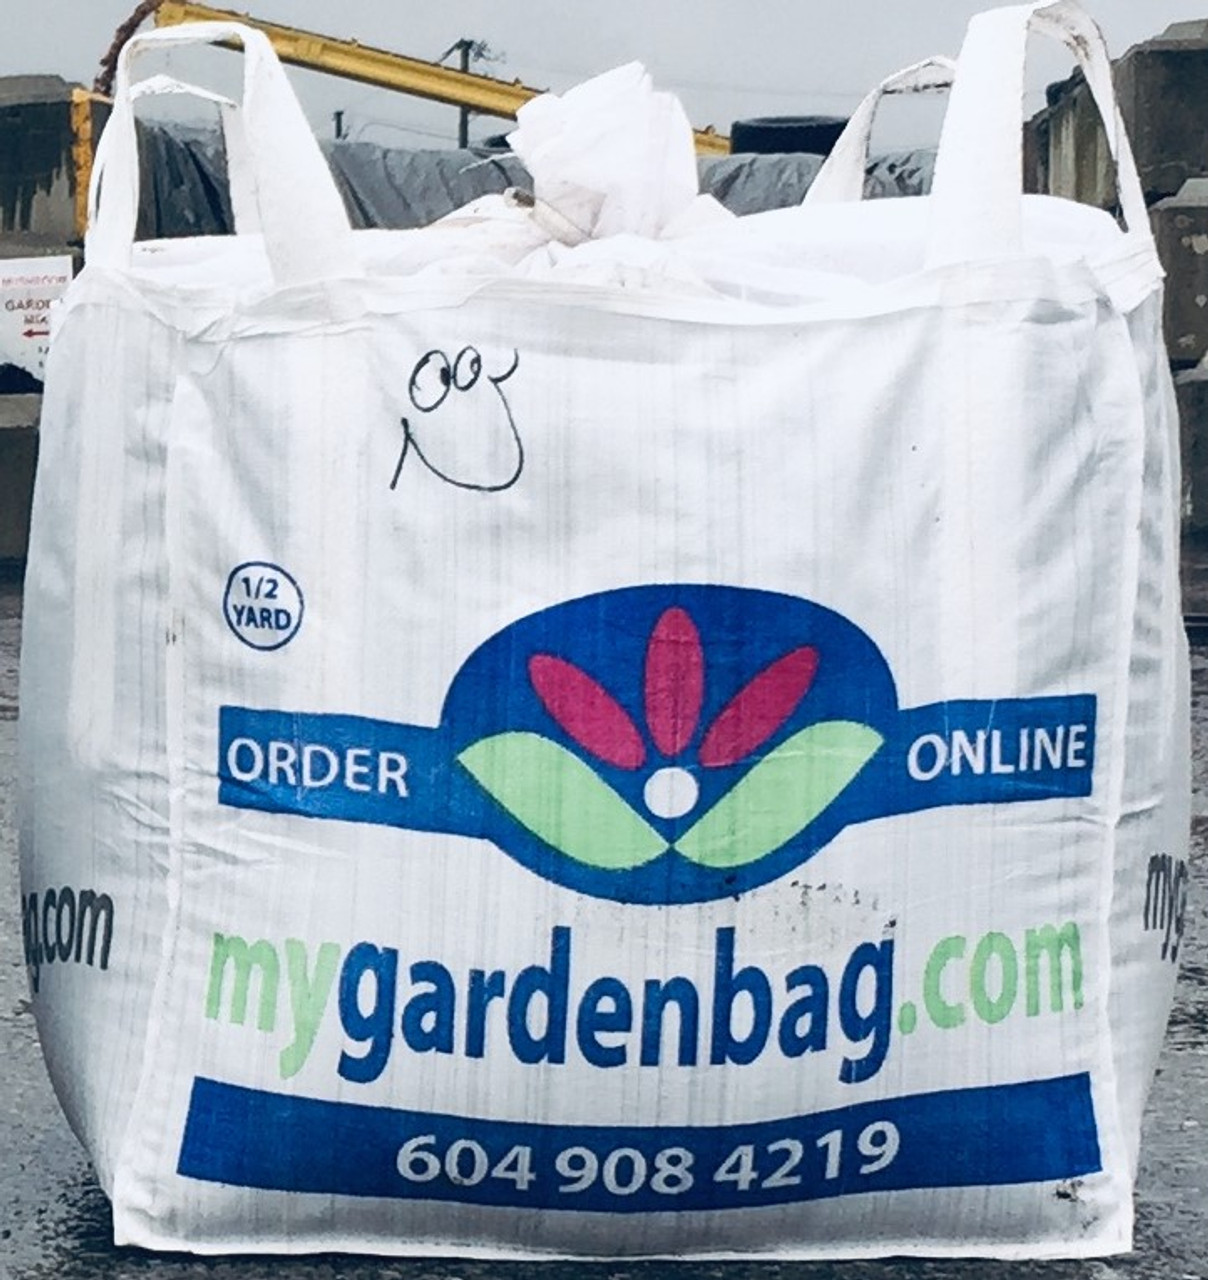 1/2 yard bag of Botanical Blend